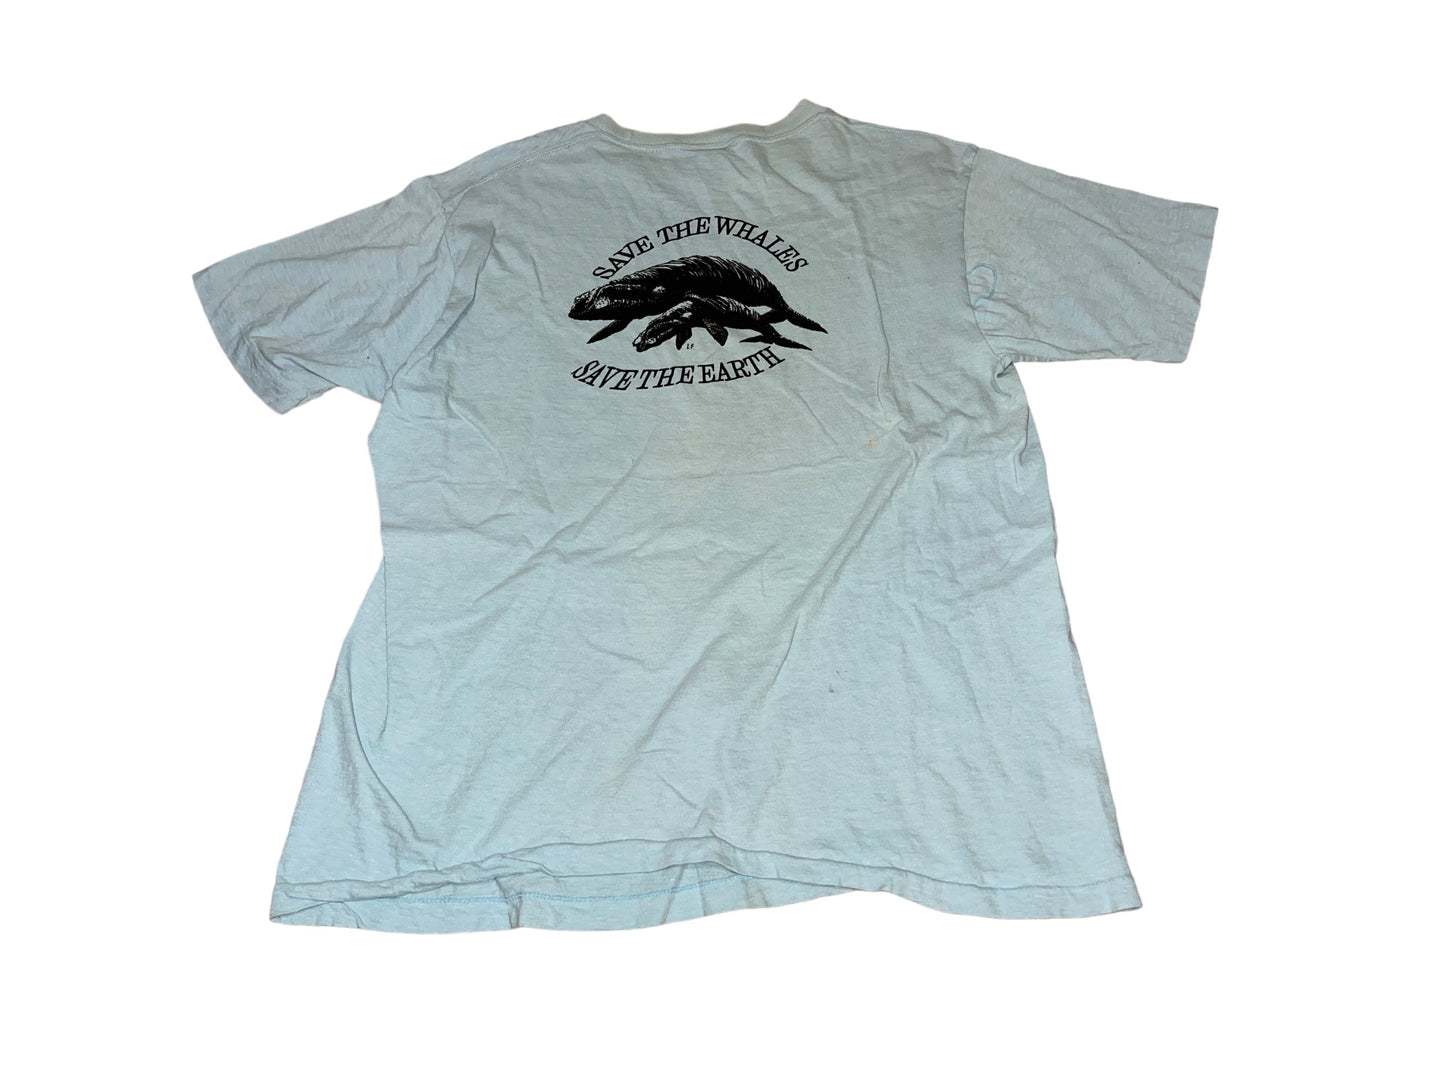 Vintage 70's Country Joe Mcdonald T-Shirt